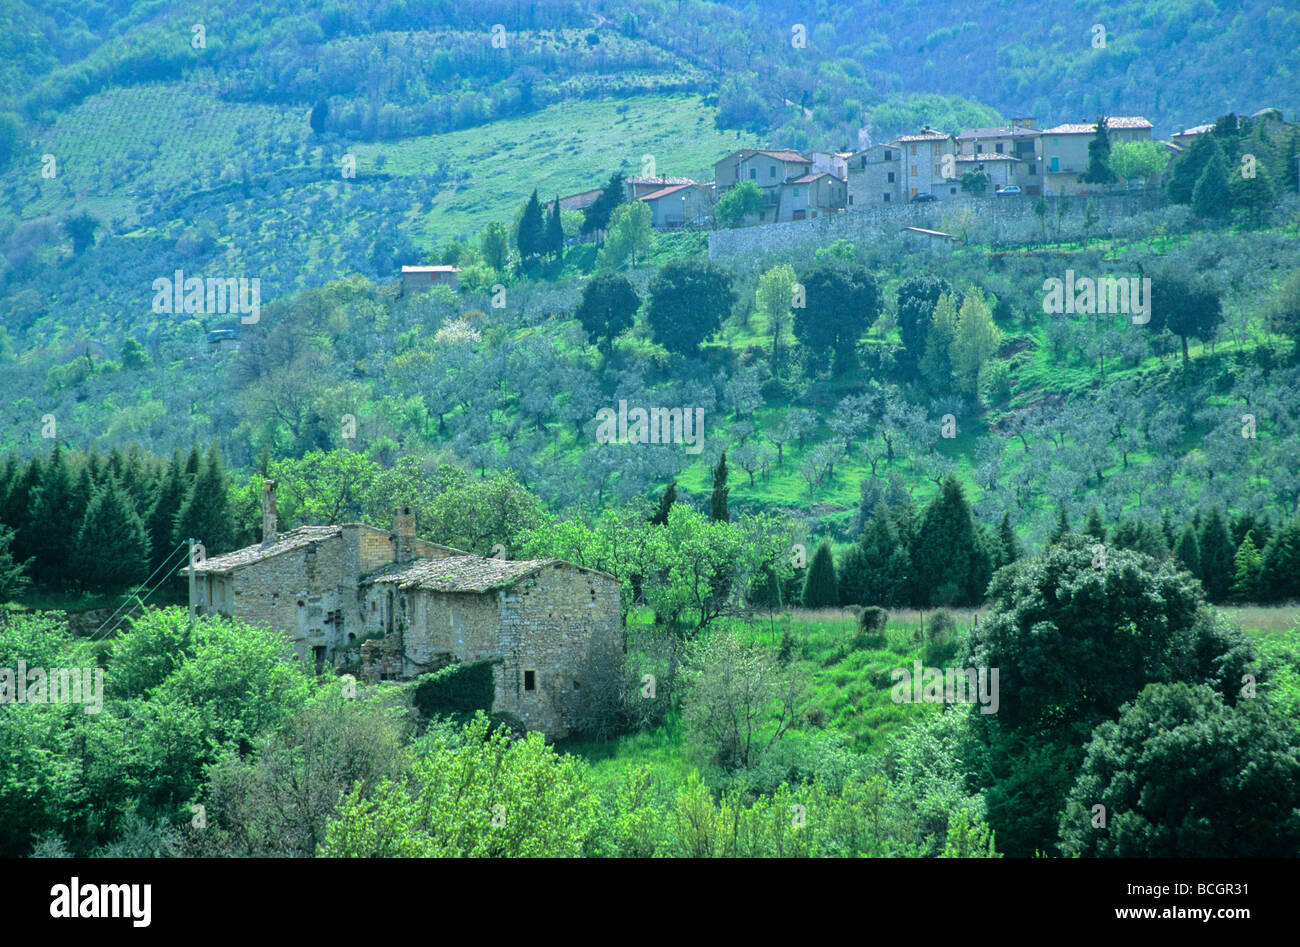 Village of Castagnola in Umbrian countryside near Giano Del Umbria Umbria Italy BEAN ALPix 0099 Stock Photo